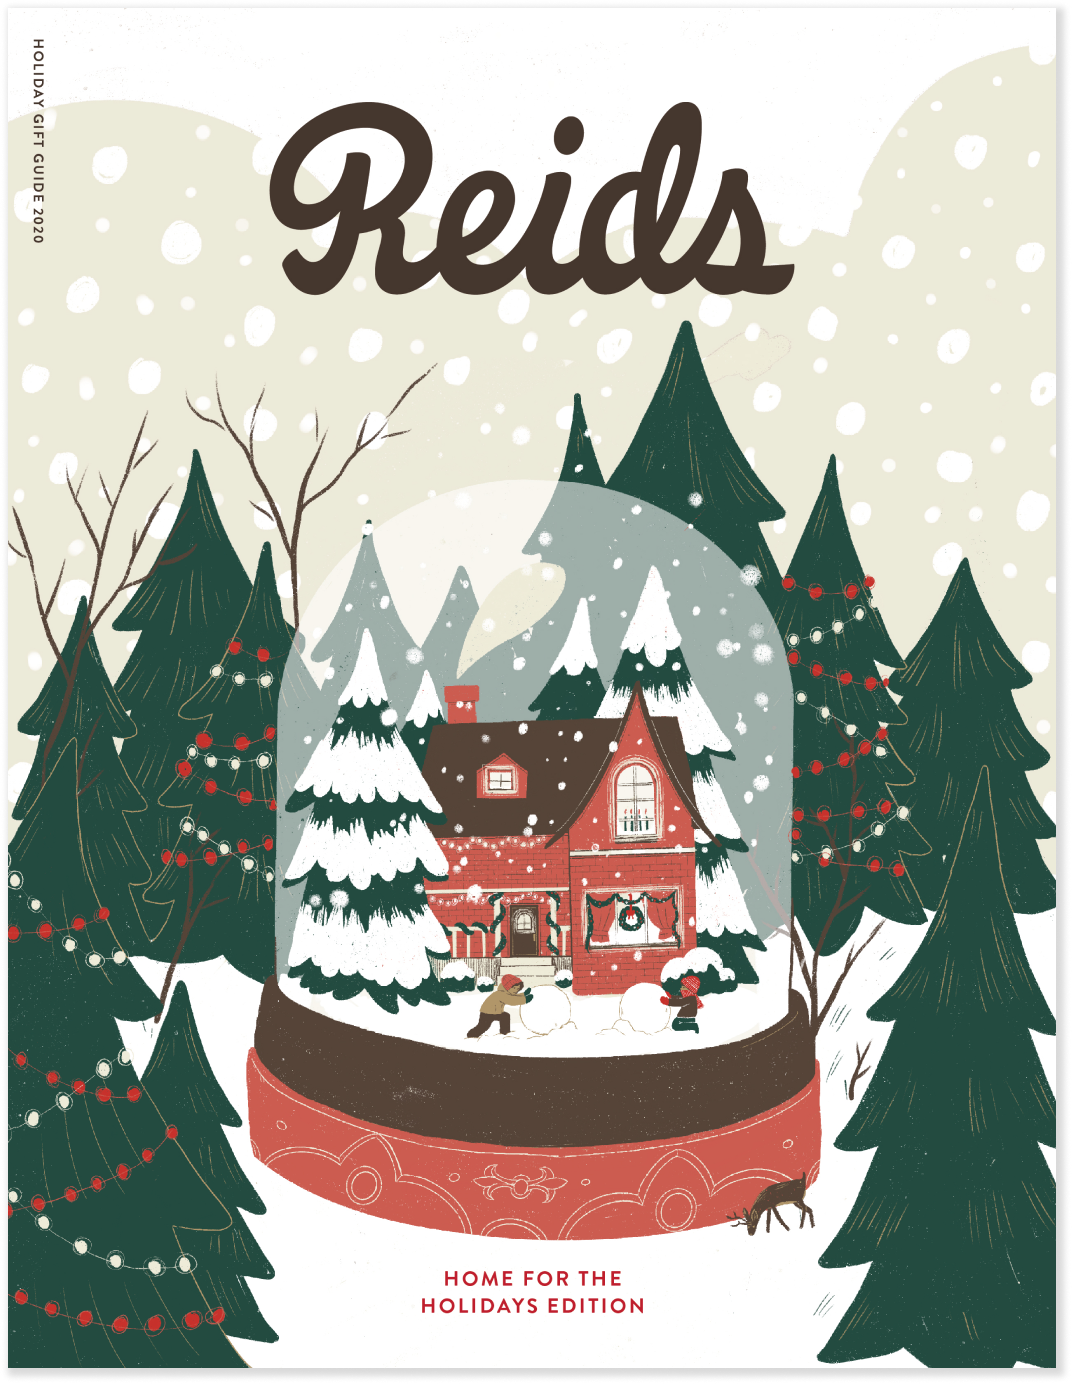 Reid's Holiday Catalog - Cover